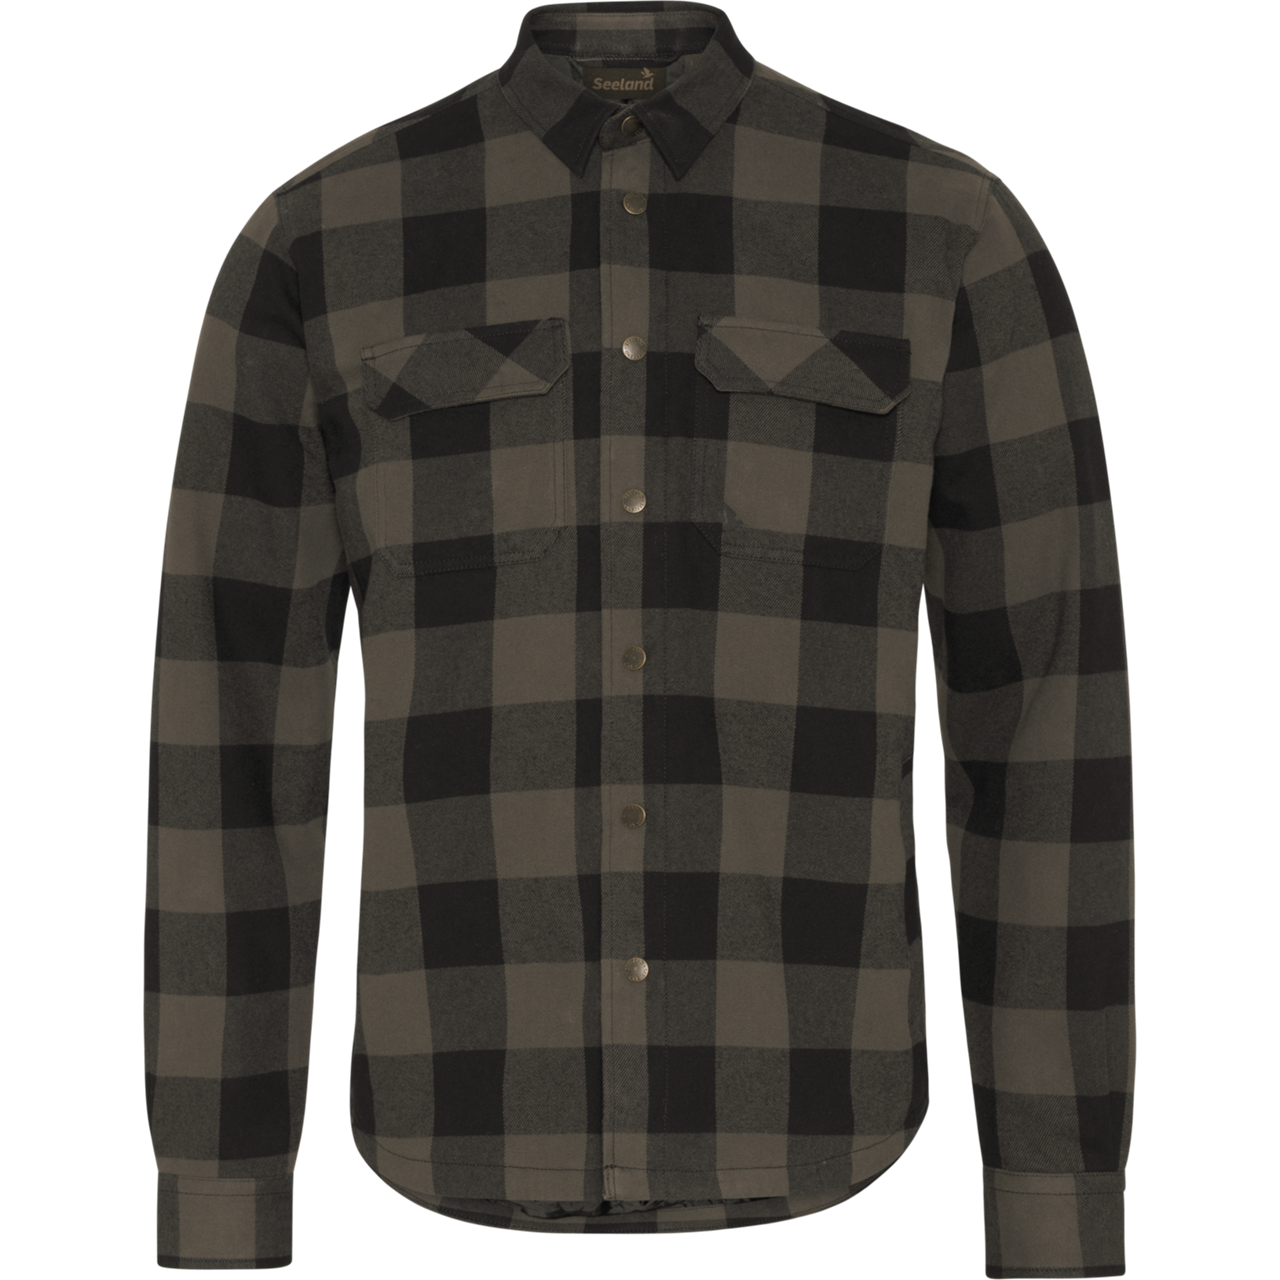 Se Seeland Canada skjorte limited edition (Grey Check, M) hos Specialbutikken